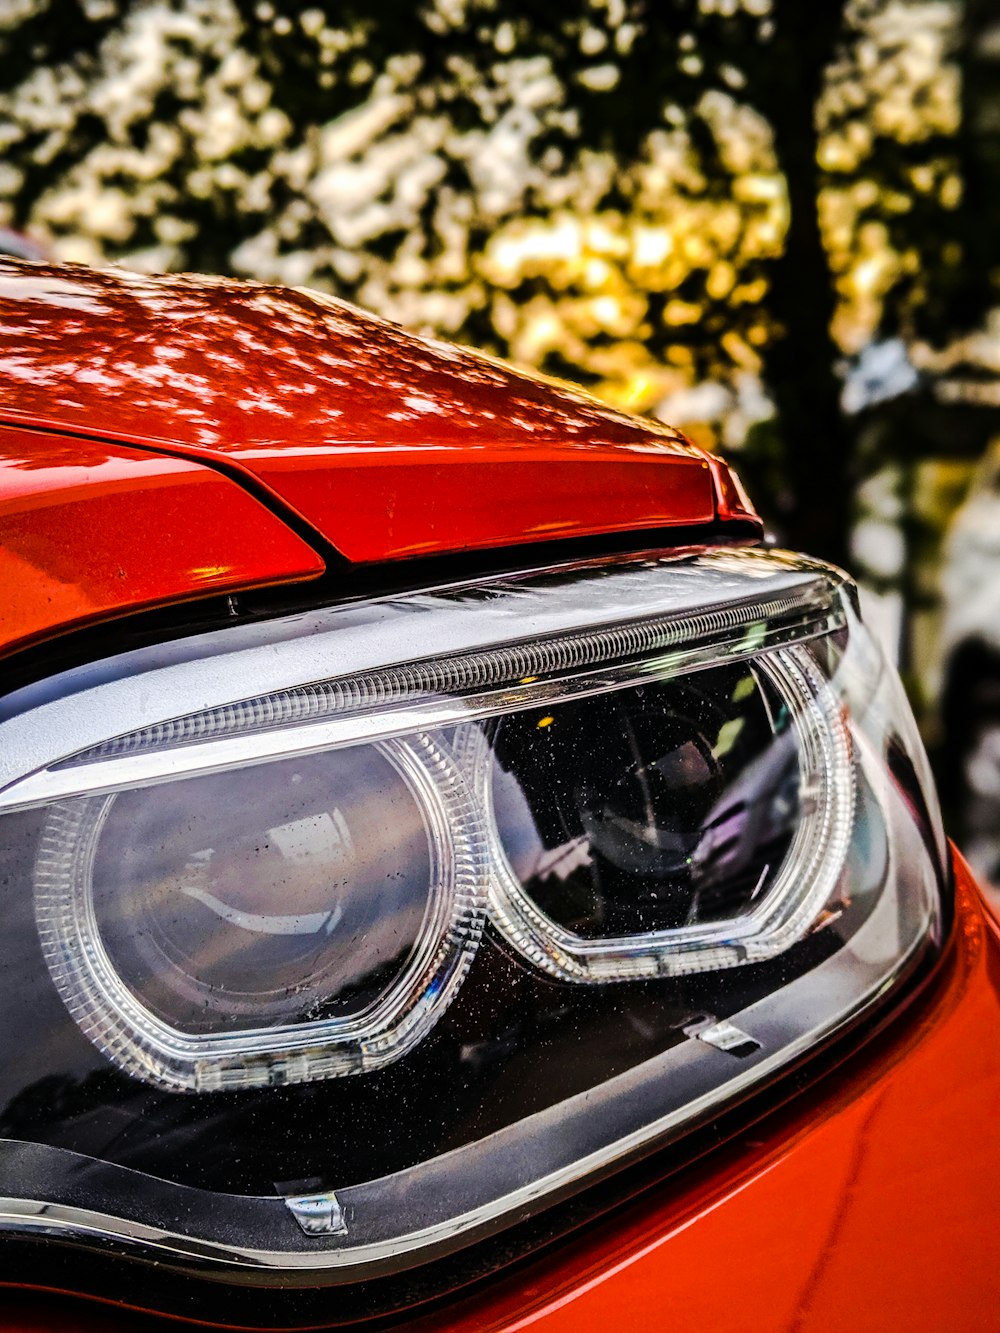 vehicle headlight in close up photo